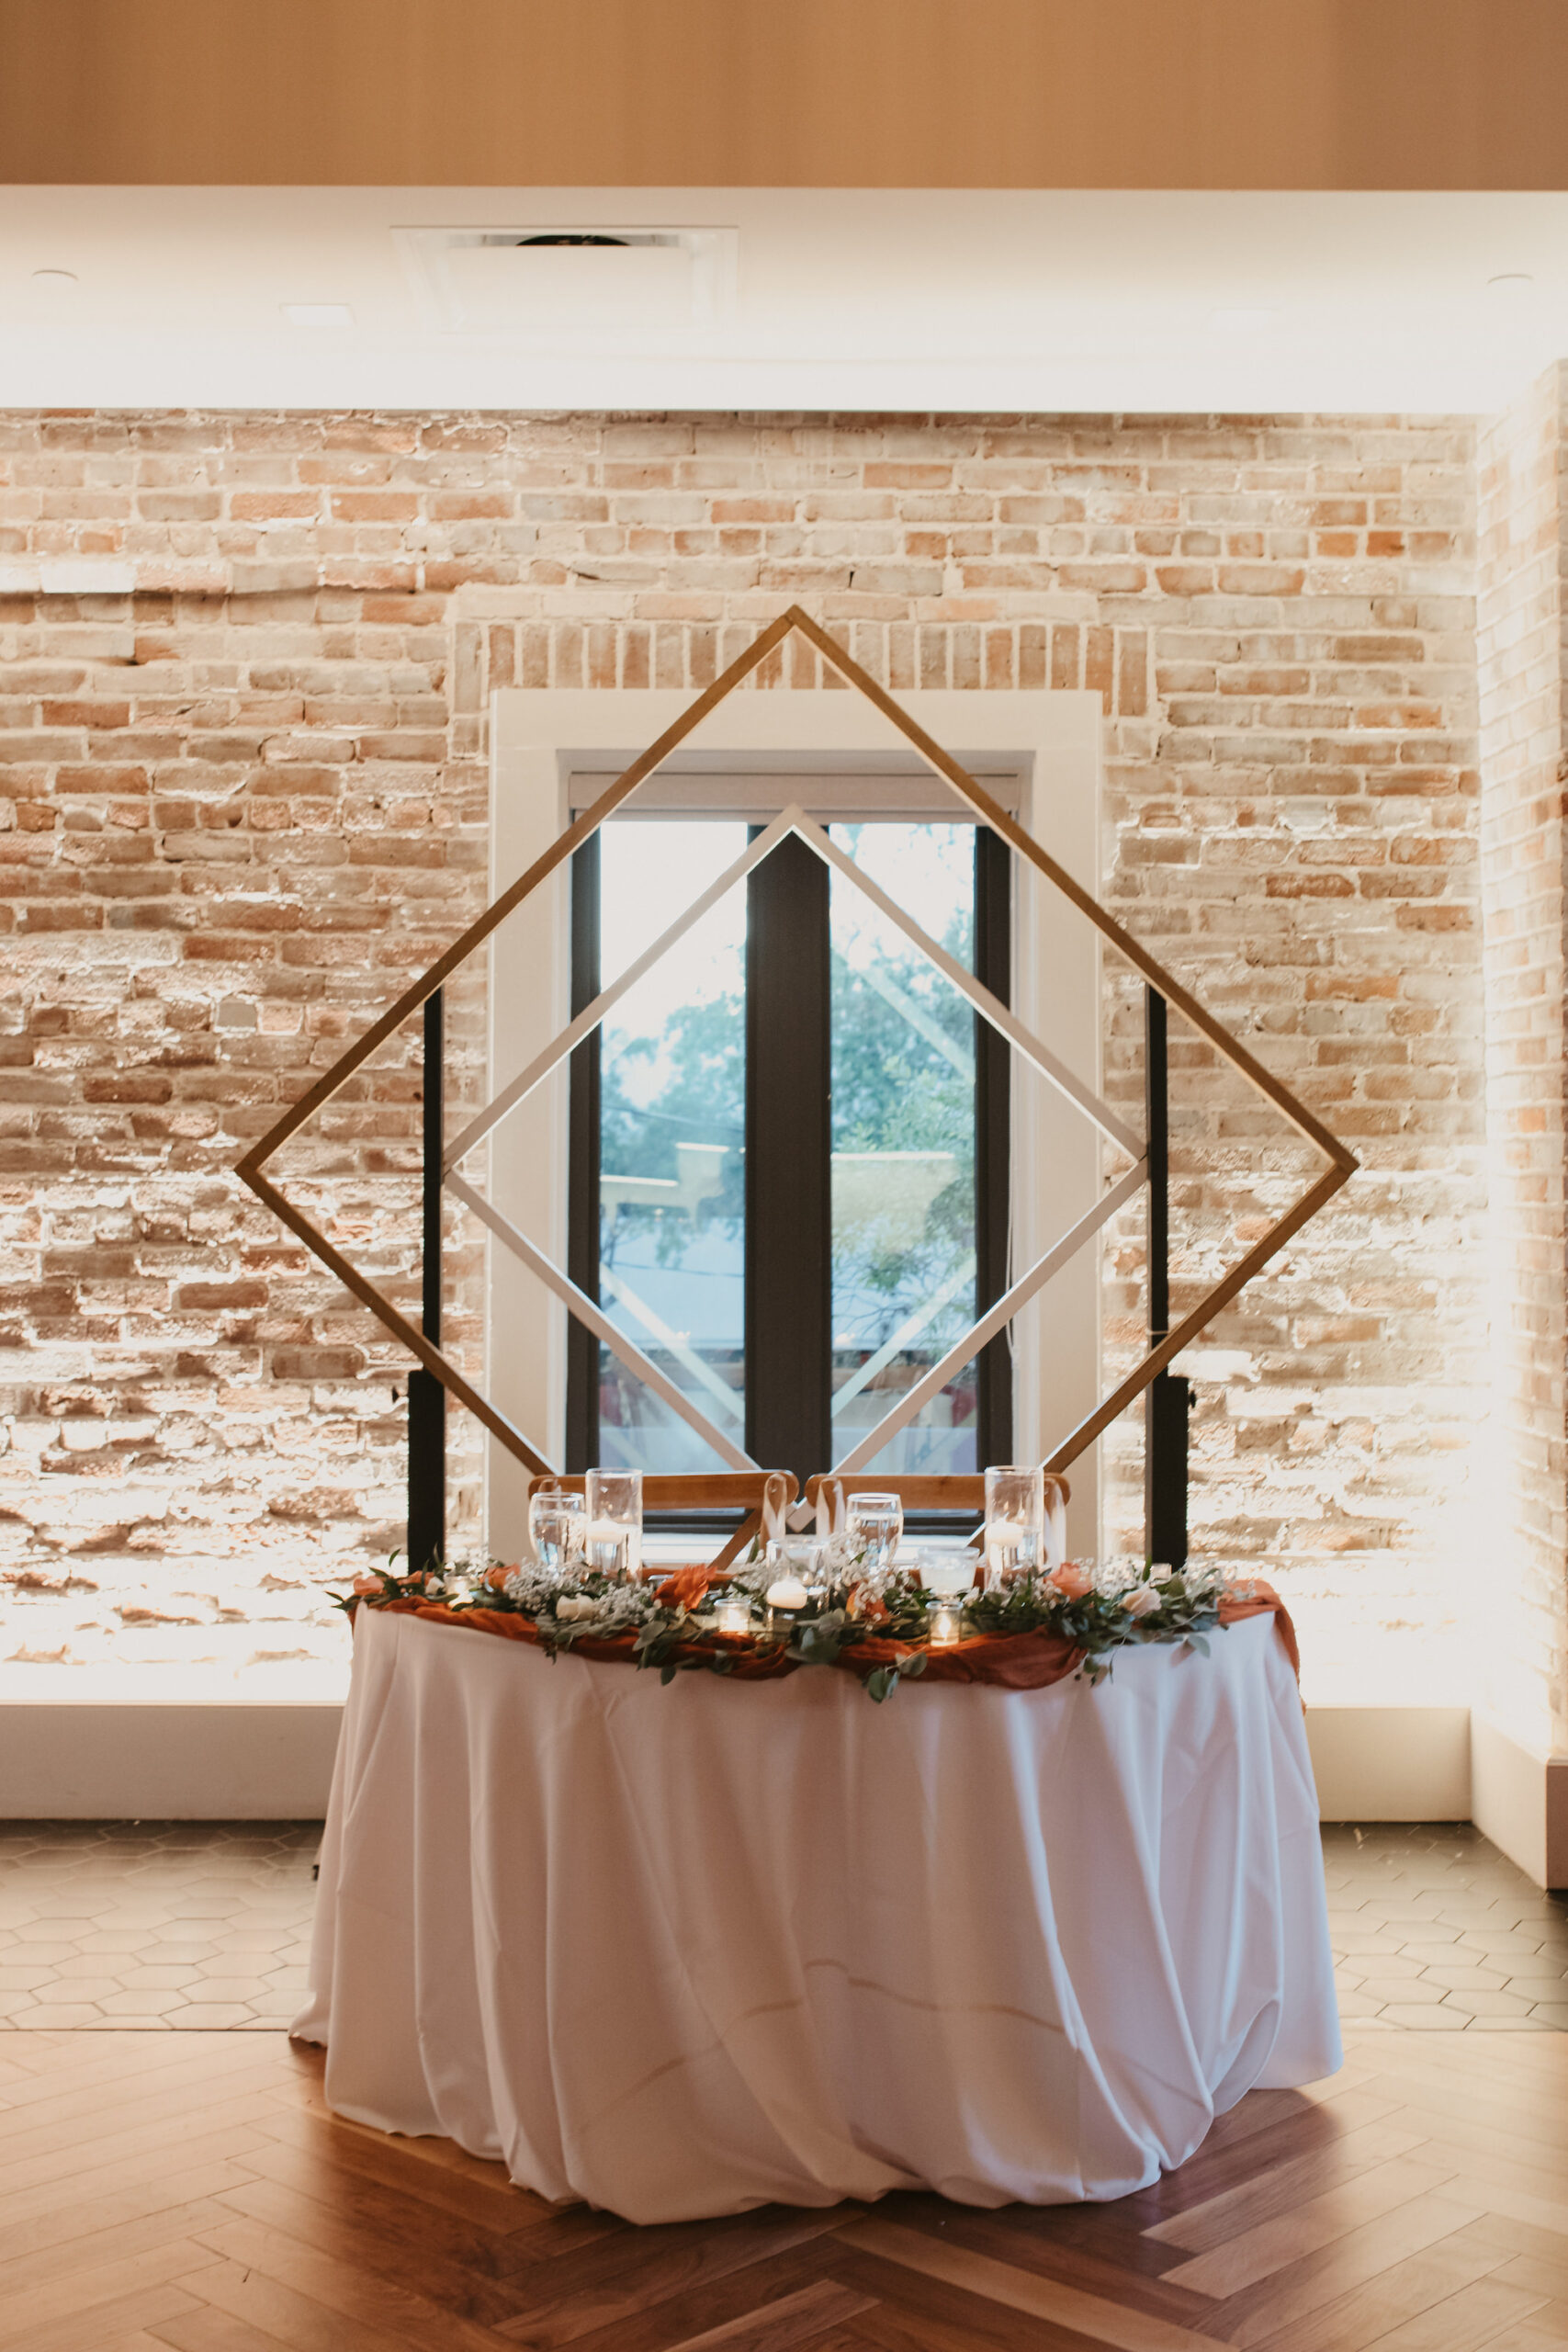 Double Diamond Geometric Backdrop for Sweetheart Table Ideas | Boho Wedding Reception Inspiration